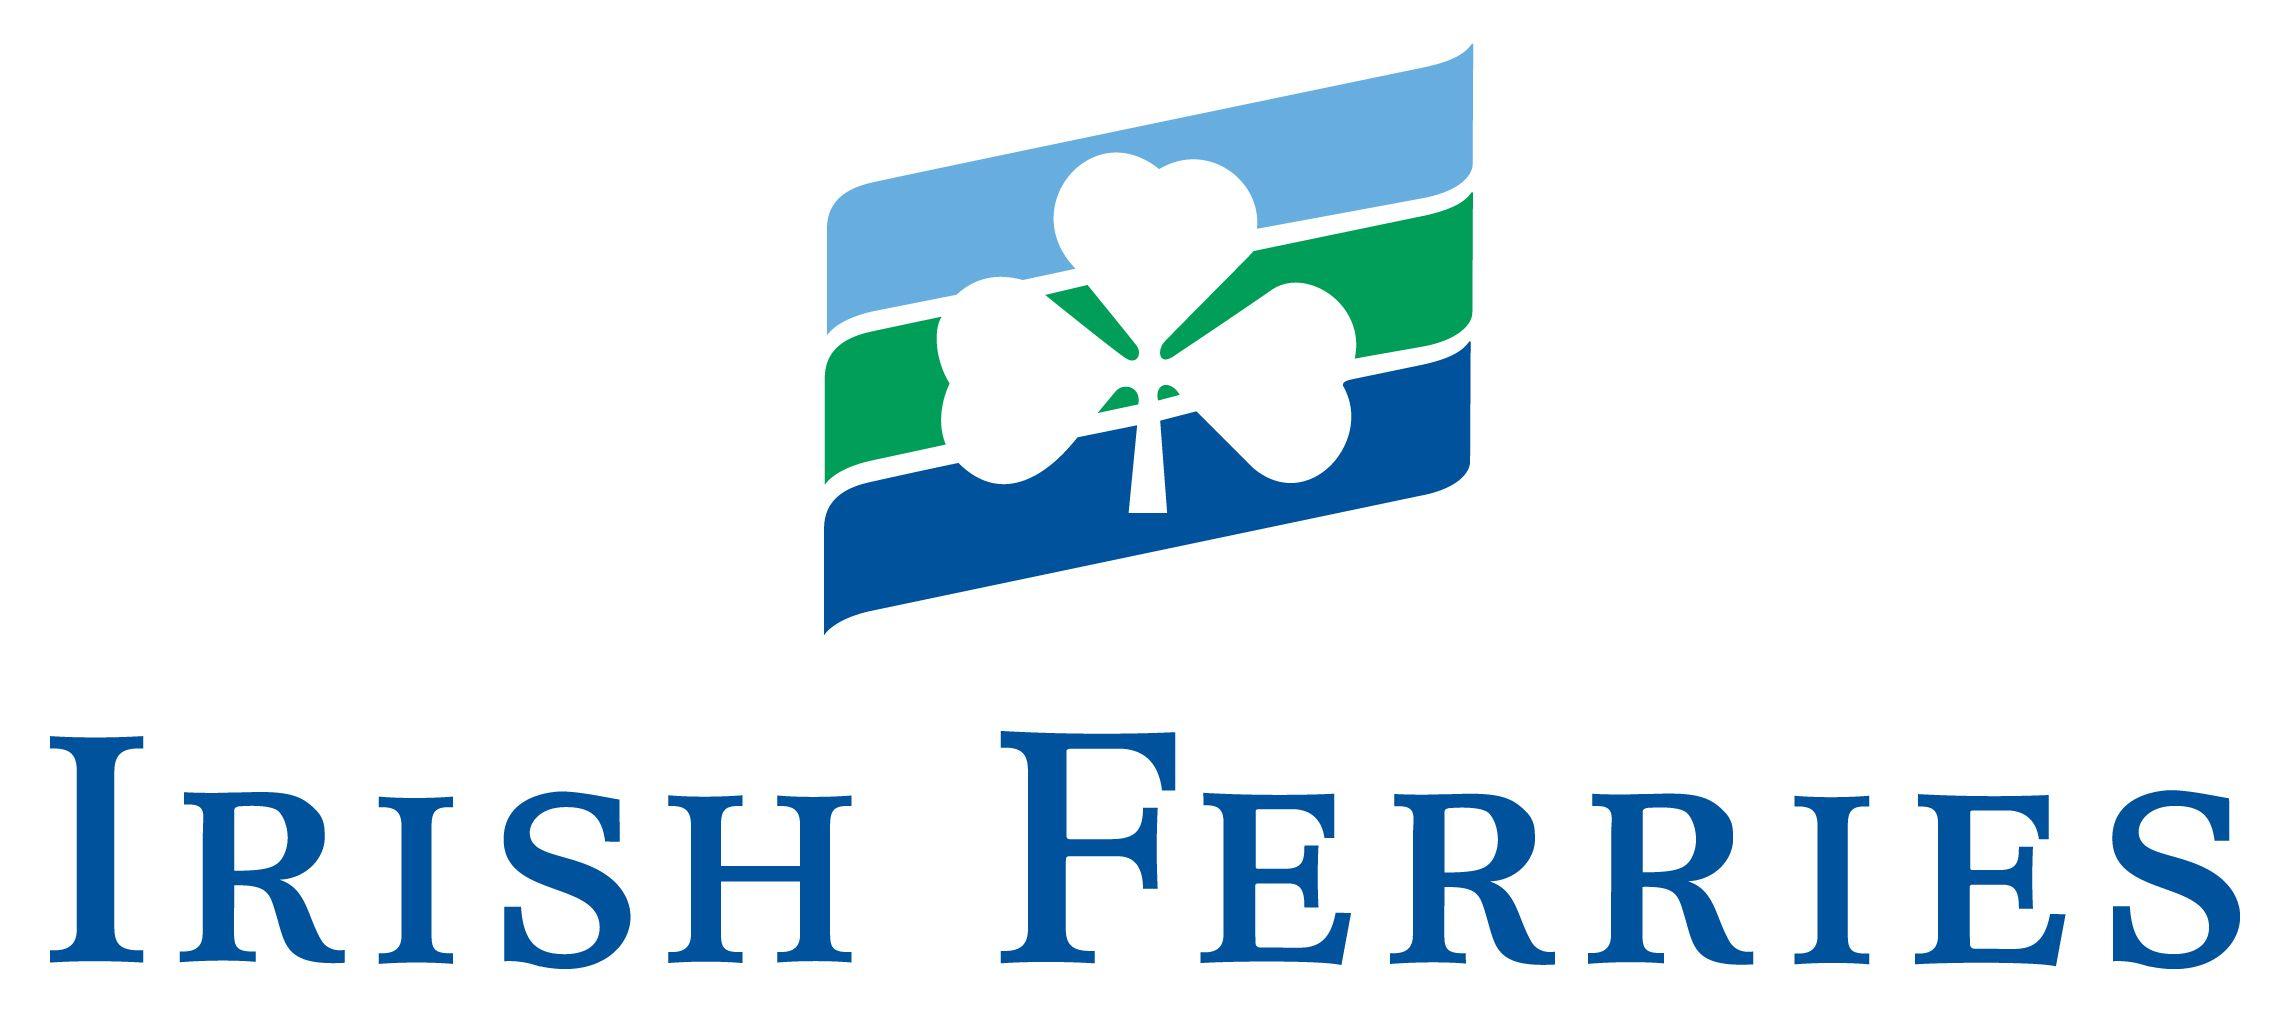 Ireland Logo - Downloads